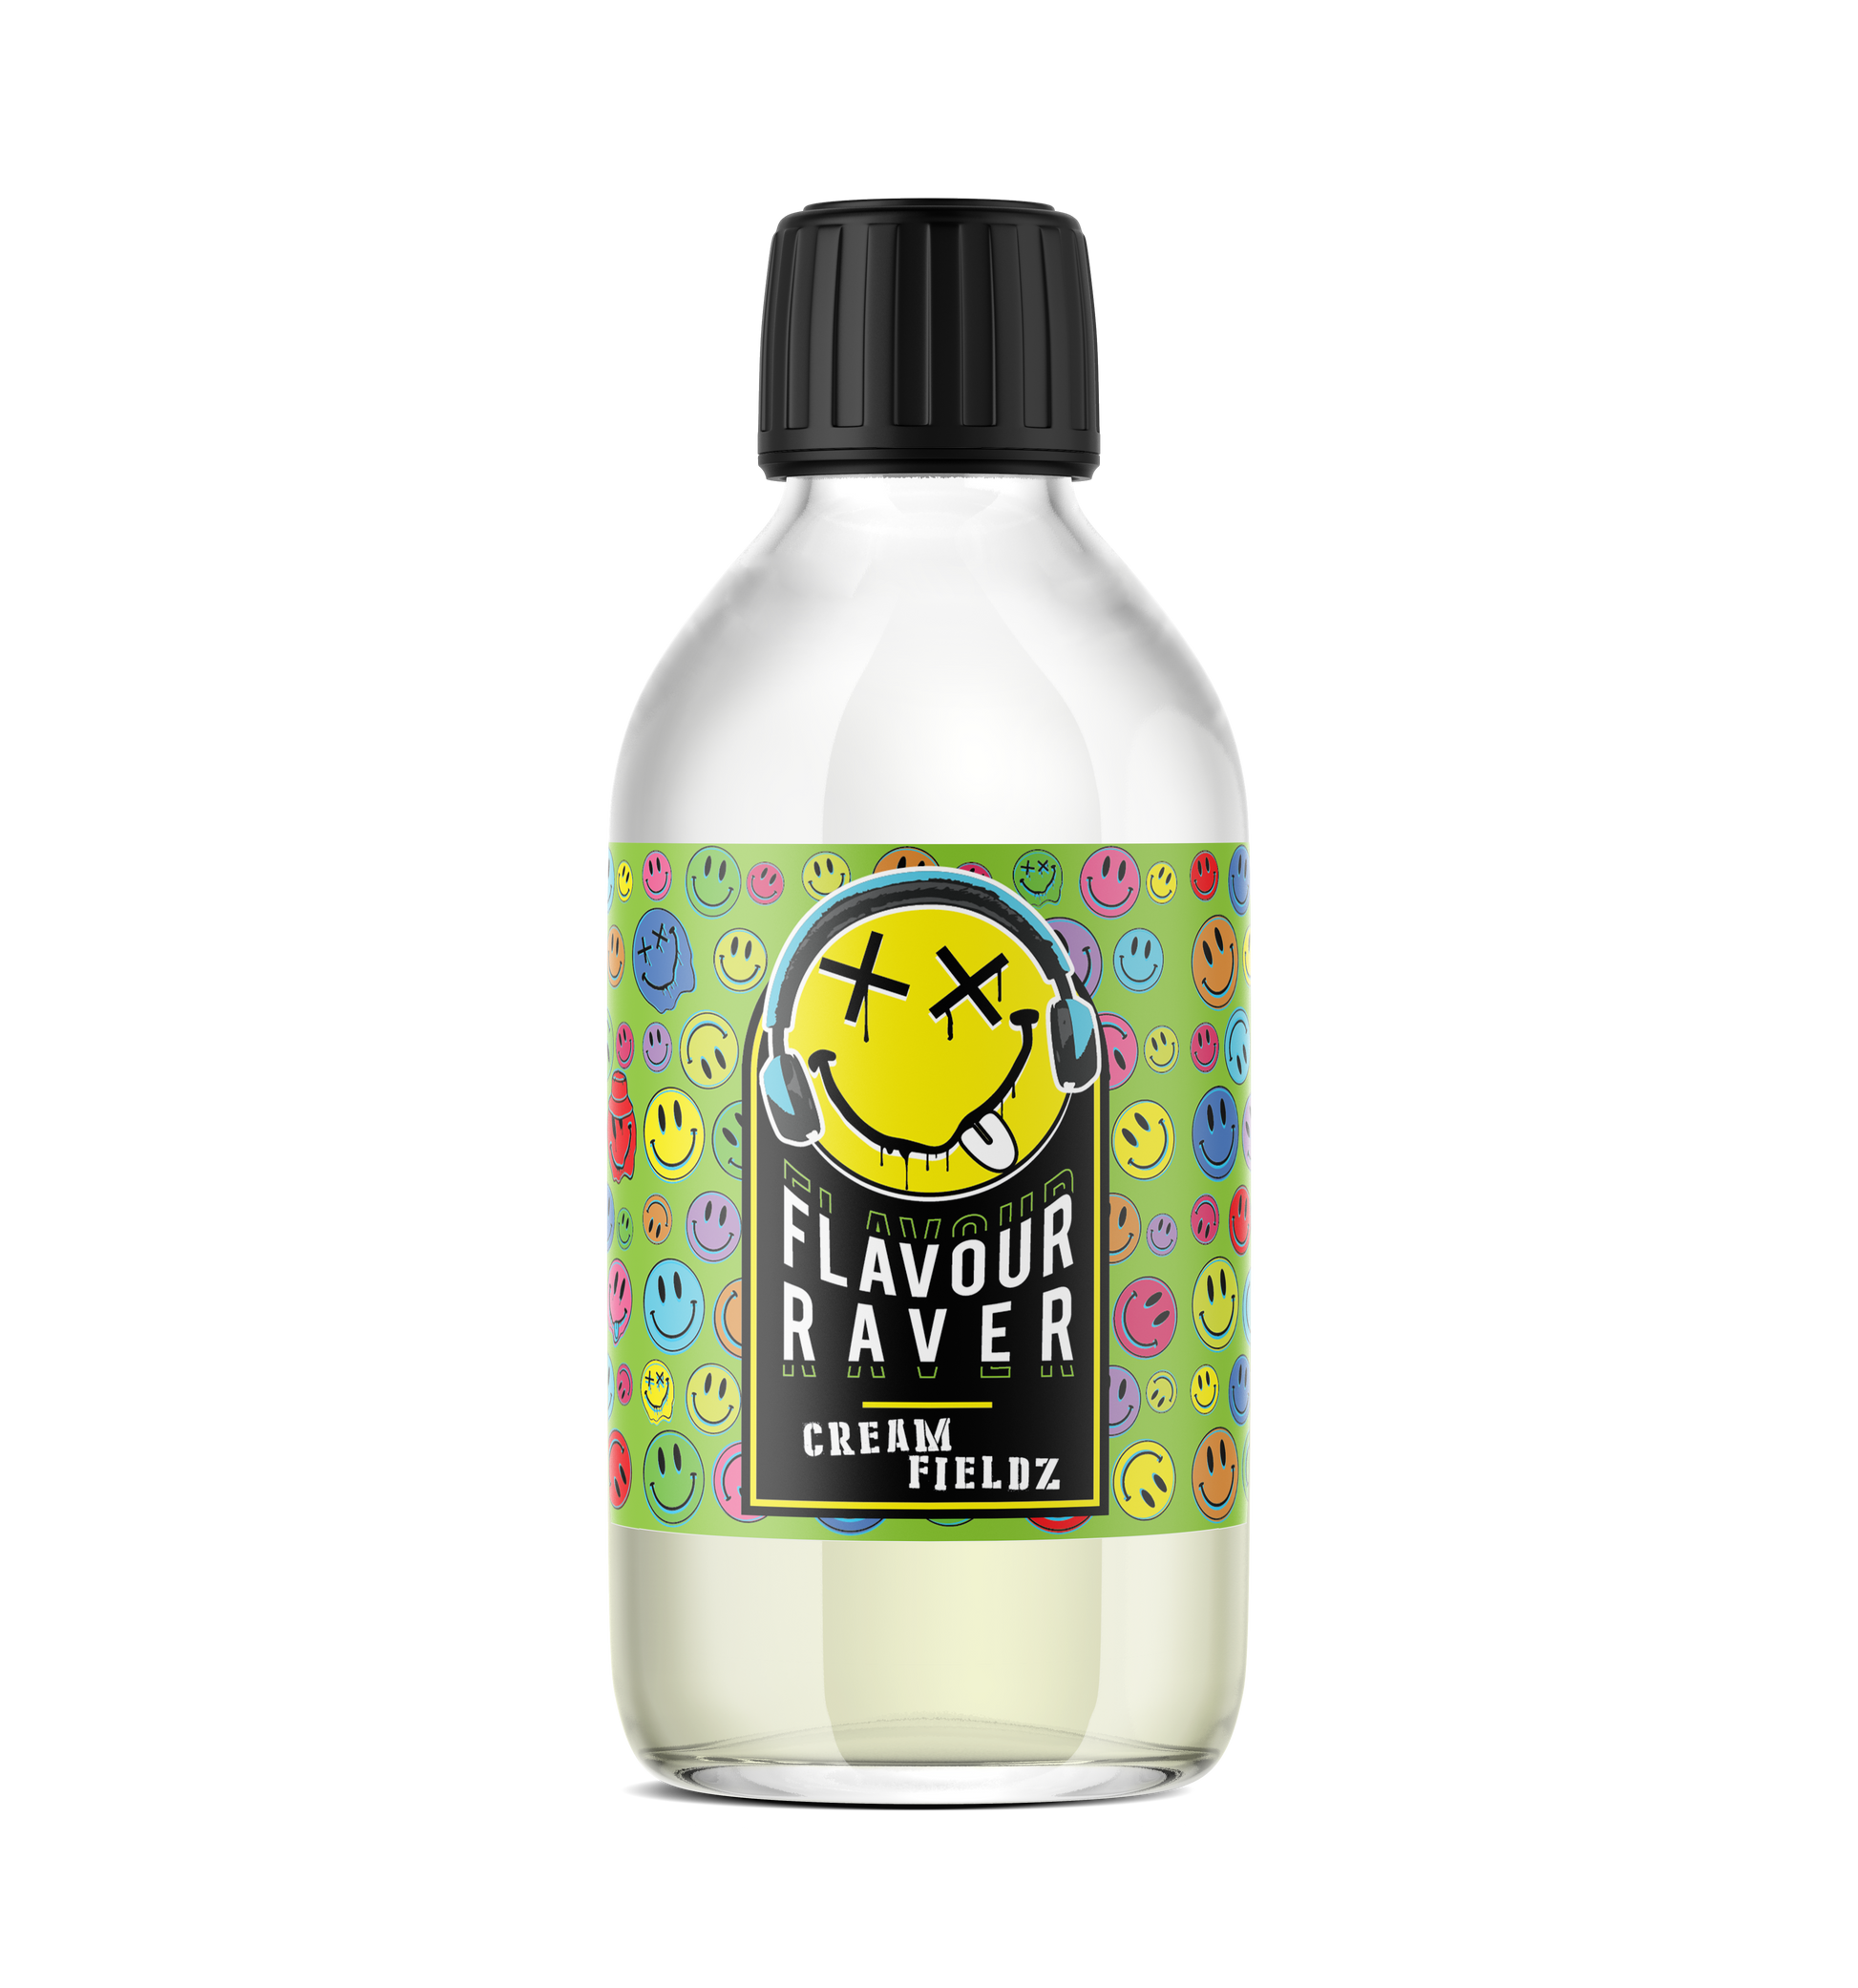 Flavour Raver Cream Fieldz 200ML Shortfill - The Ace Of Vapez